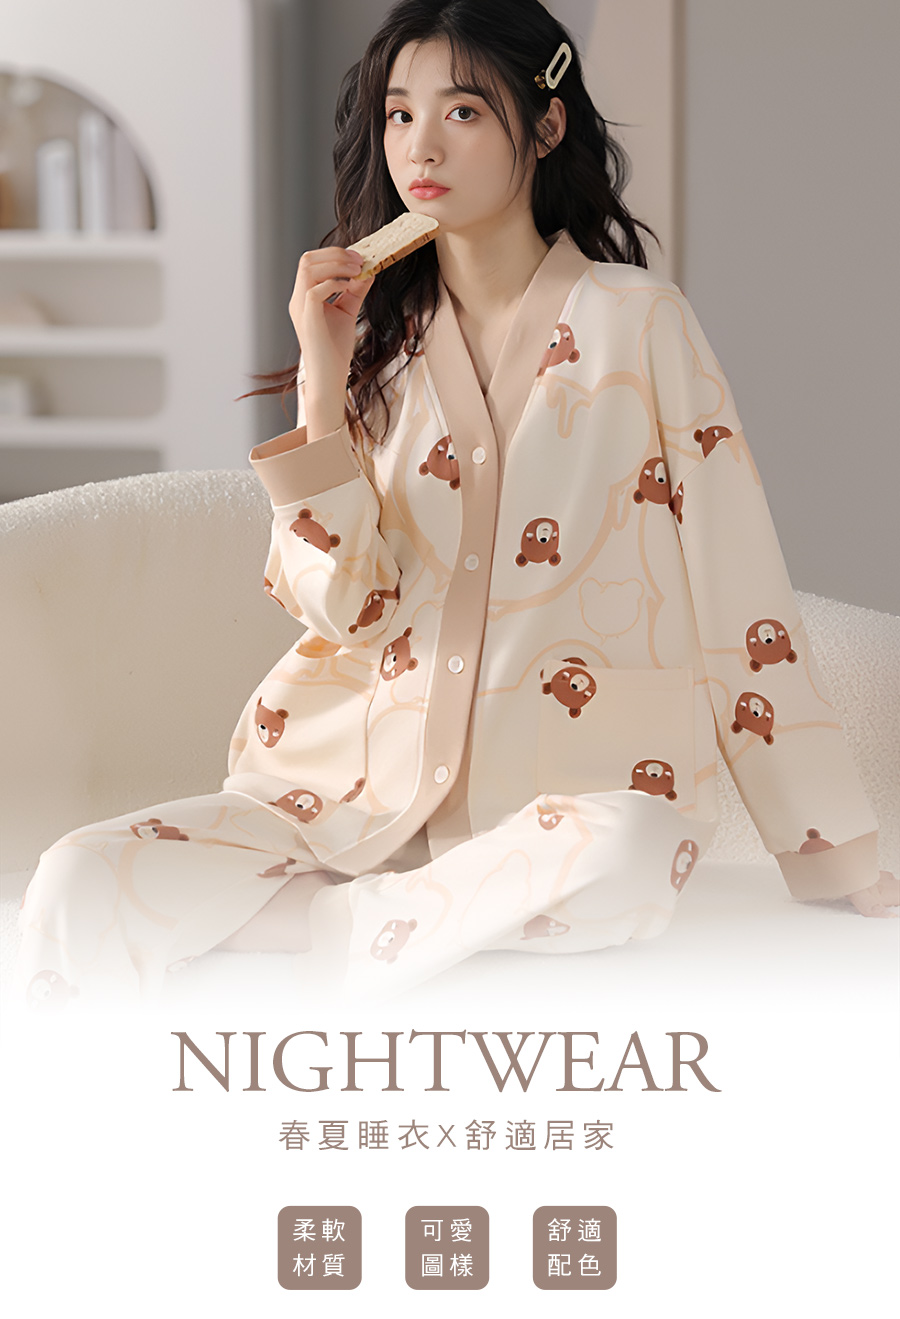 PINK LADY 棉柔長袖排釦成套睡衣 可可小熊 印花寬版